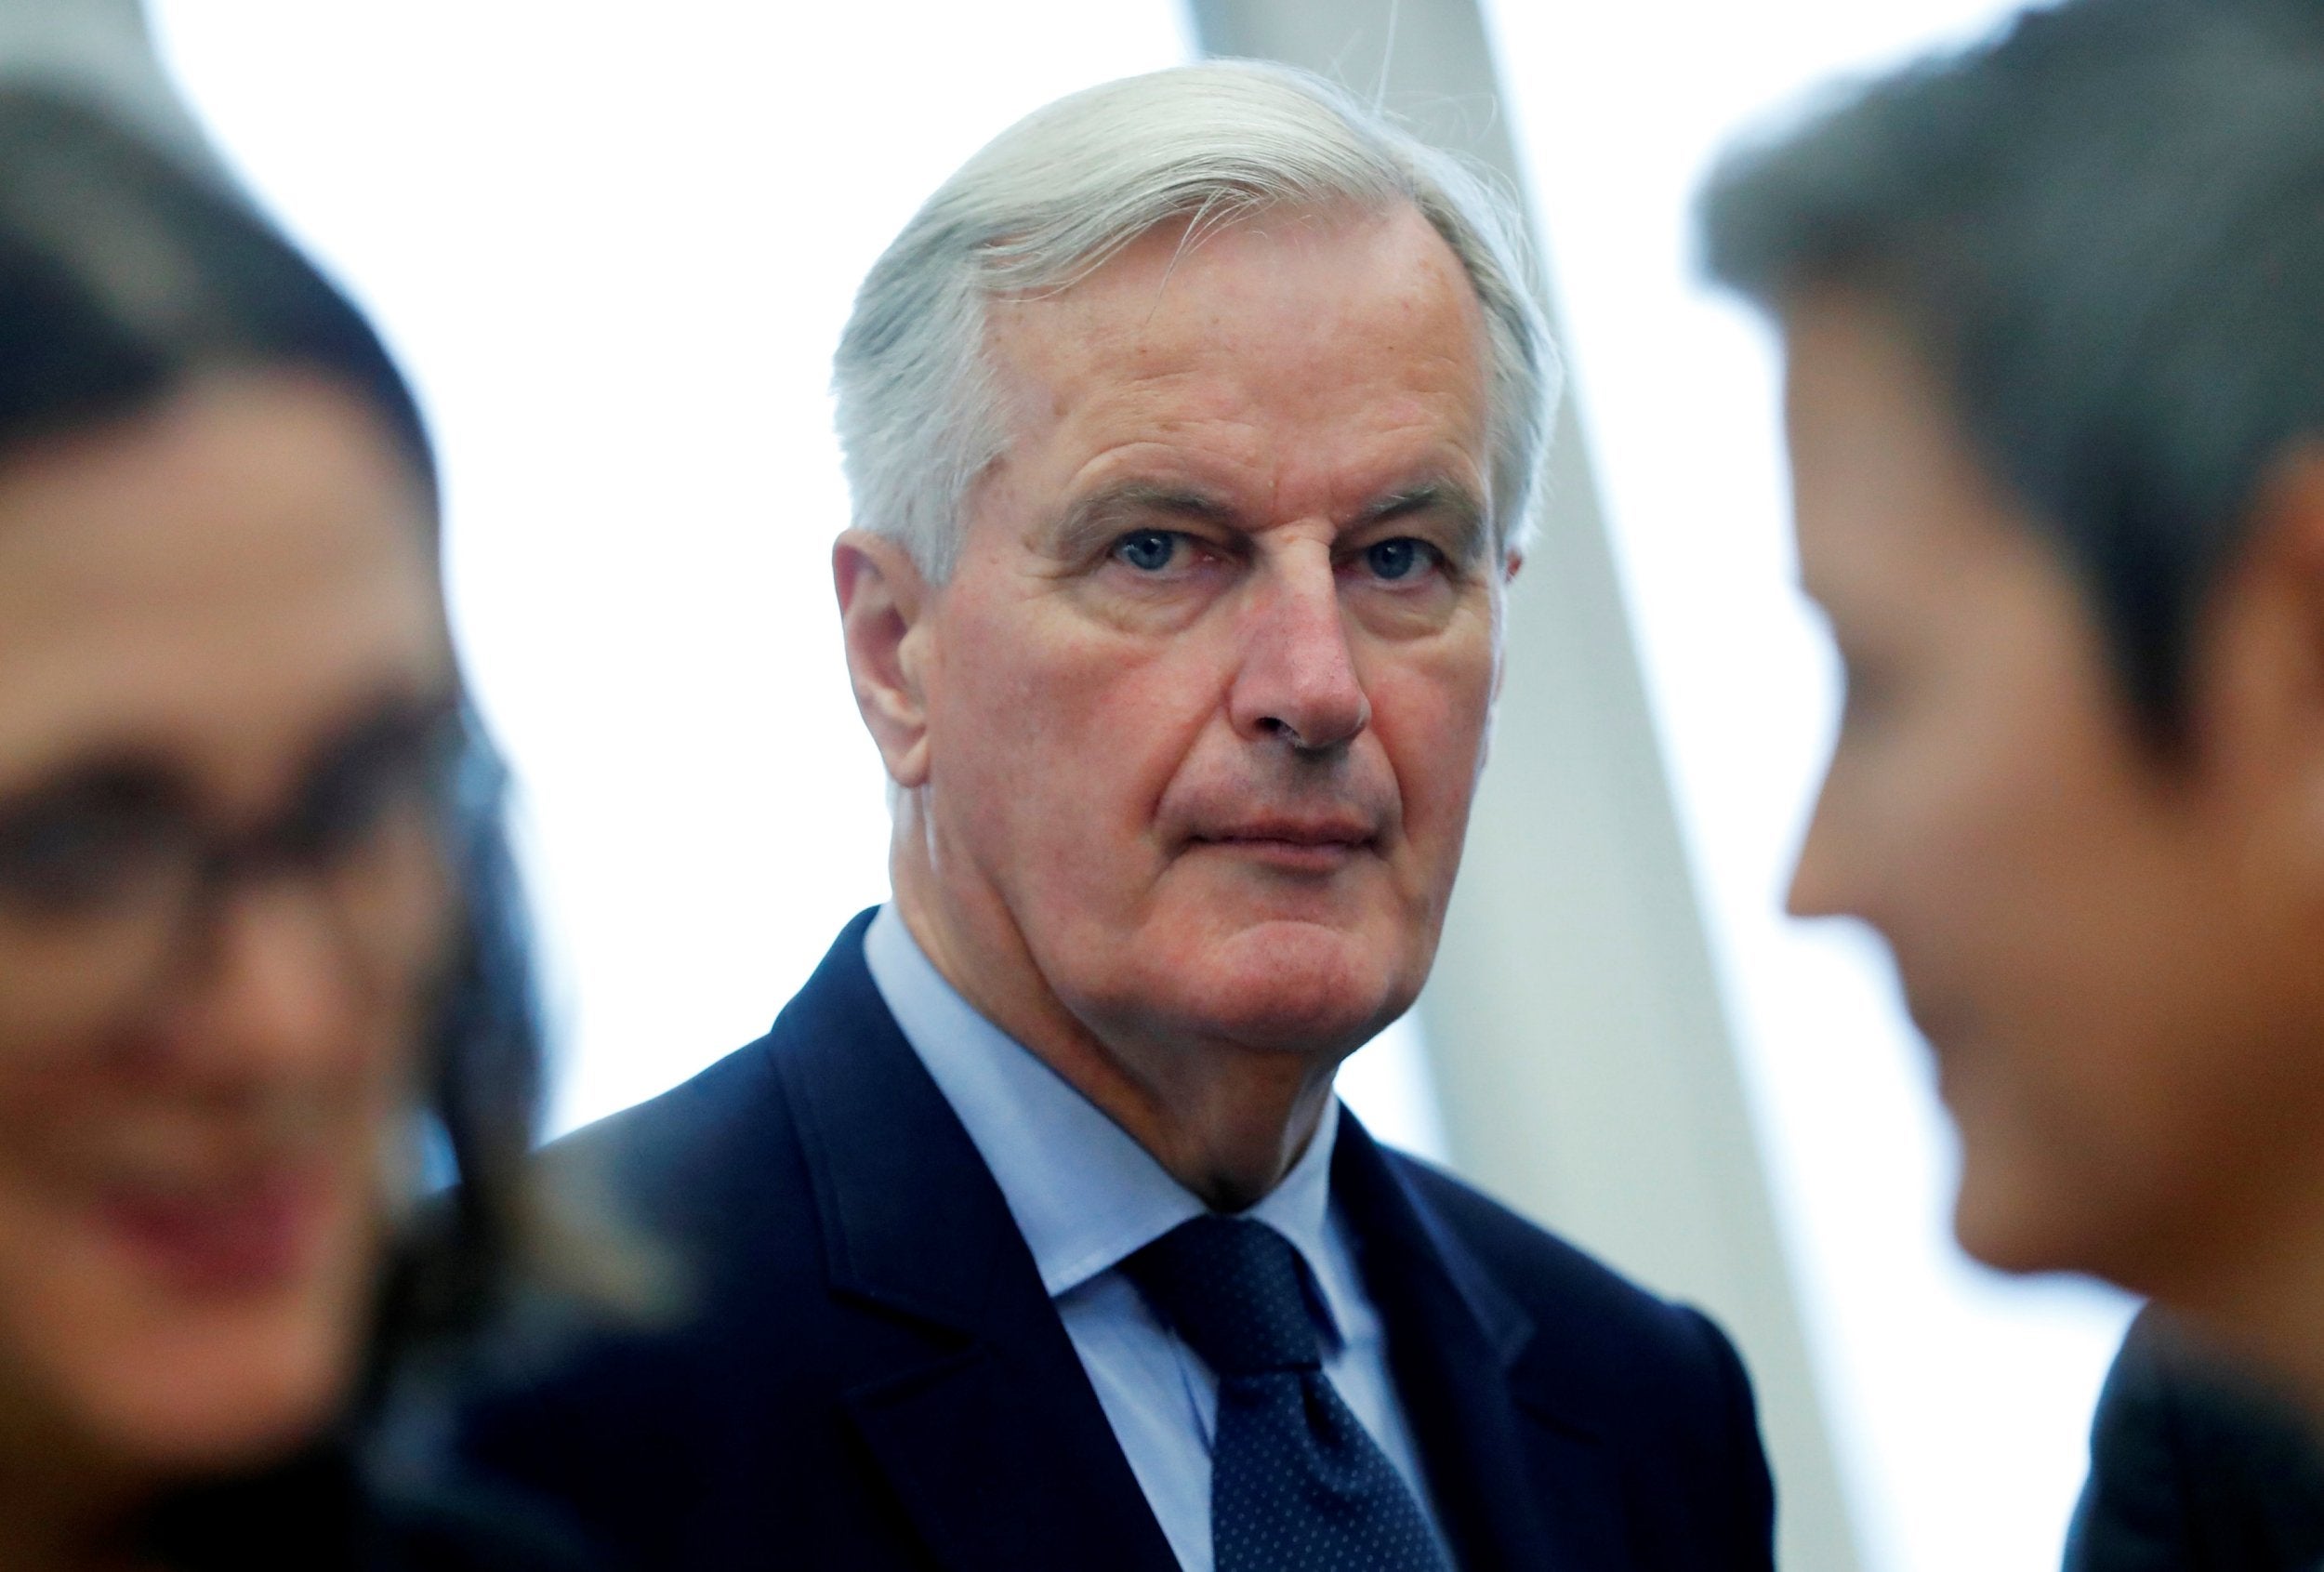 Michel Barnier was the EU’s chief negotiator during Brexit talks